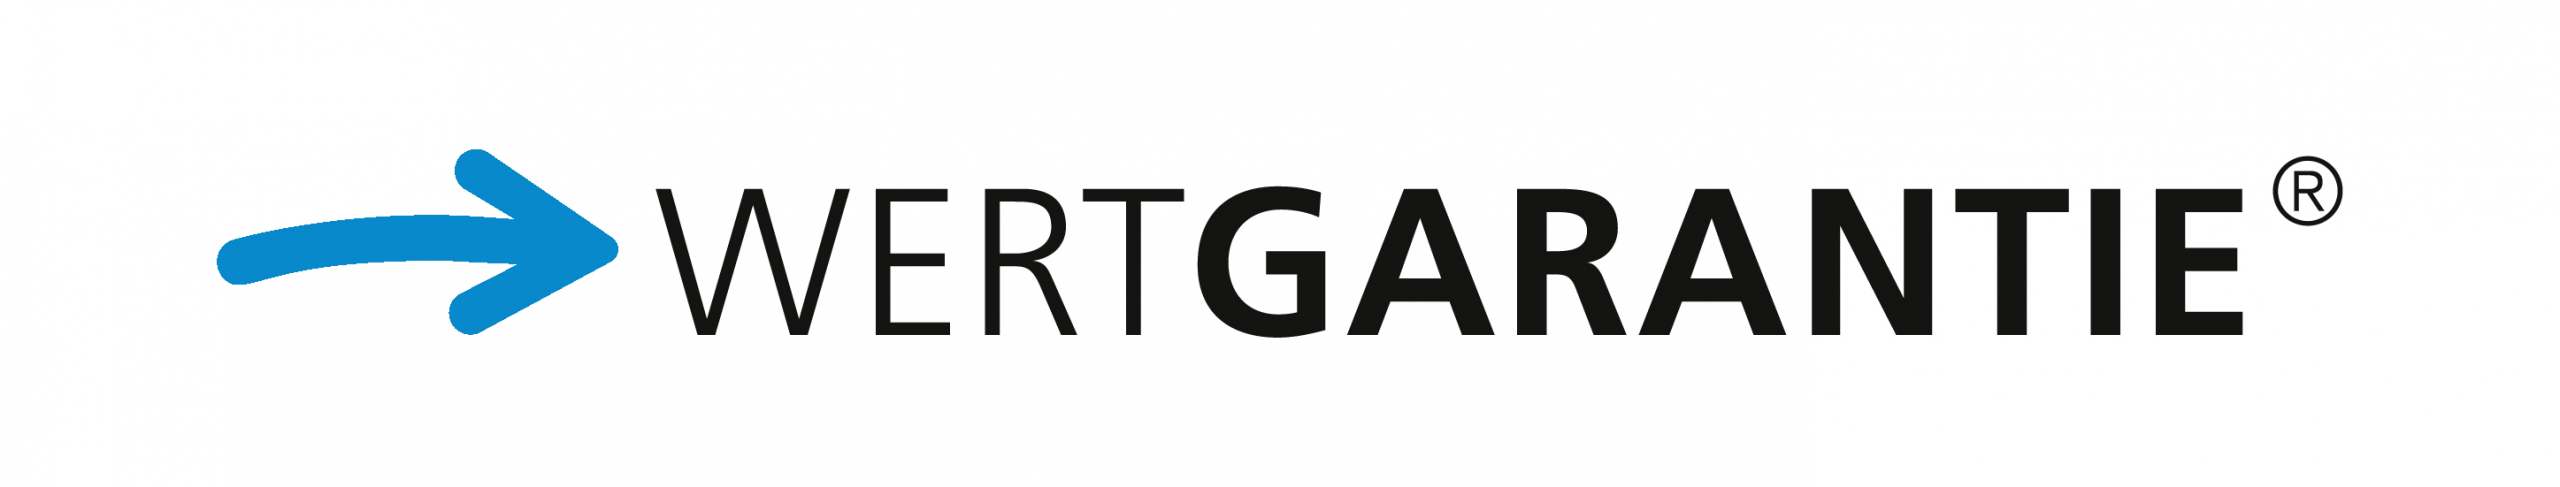 Wertgarantie Logo Original